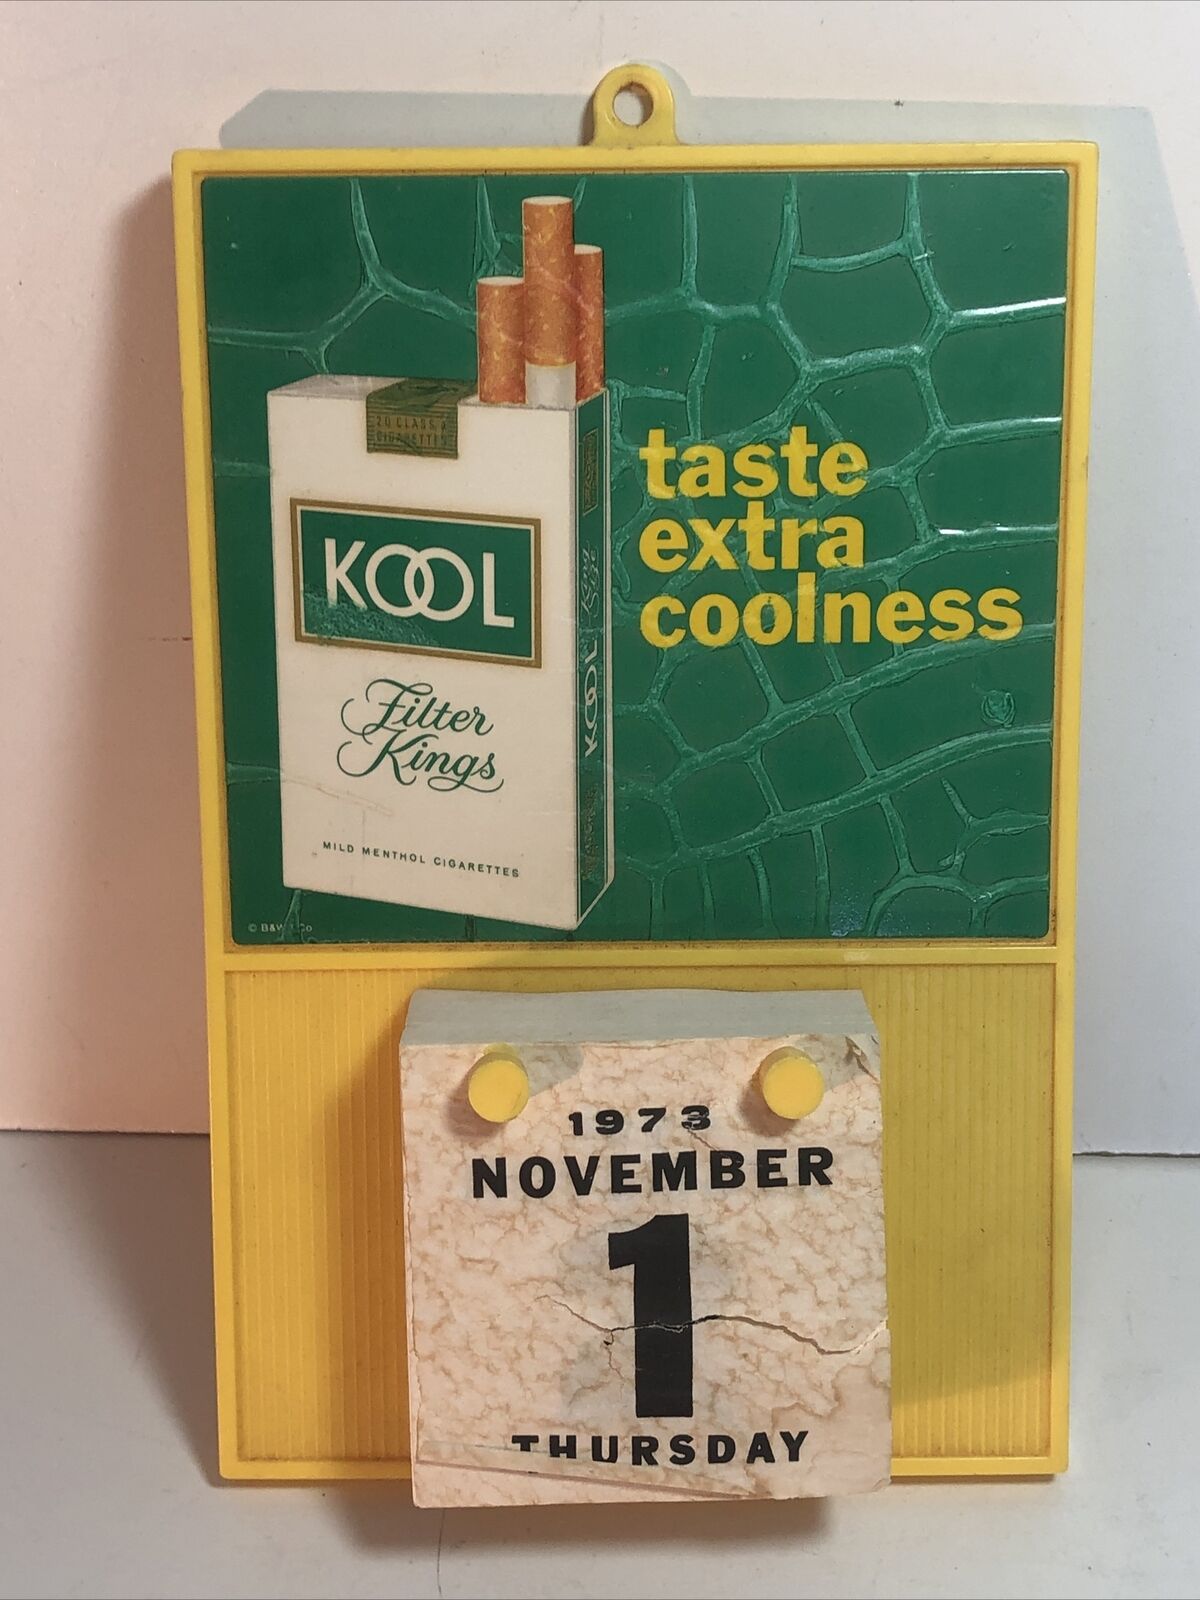 Kool Cigarettes Advertising Calendar from 1973-1974 Plastic